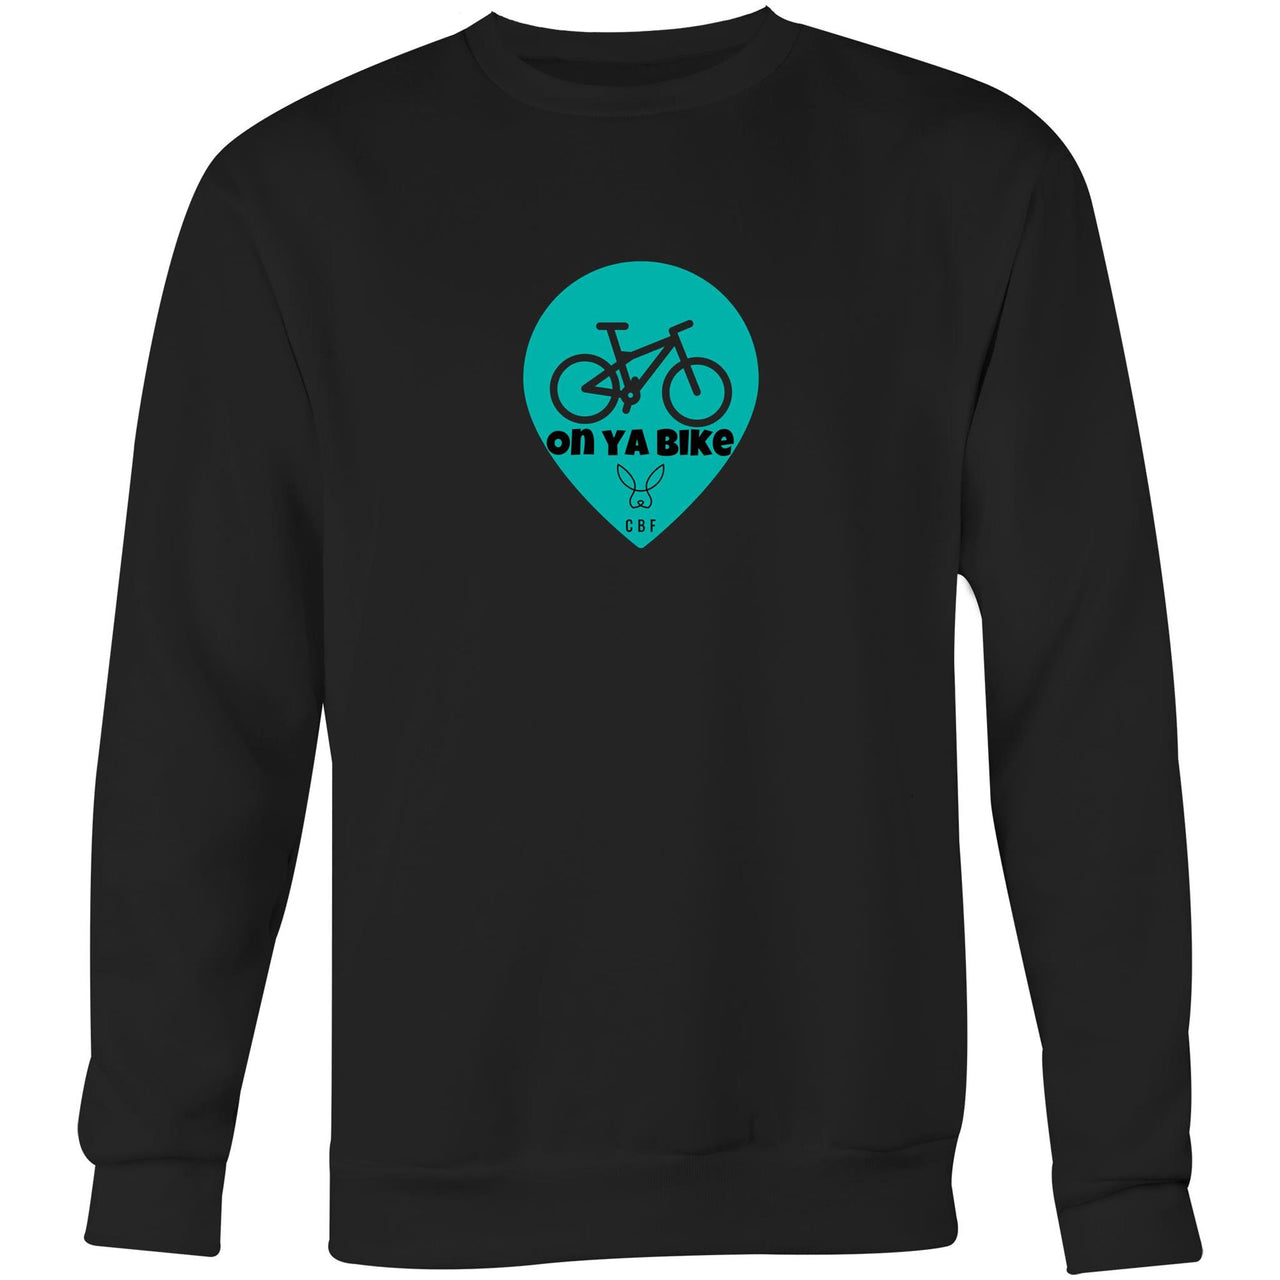 On Ya Bike Crew Sweatshirt Black by CBF Clothing